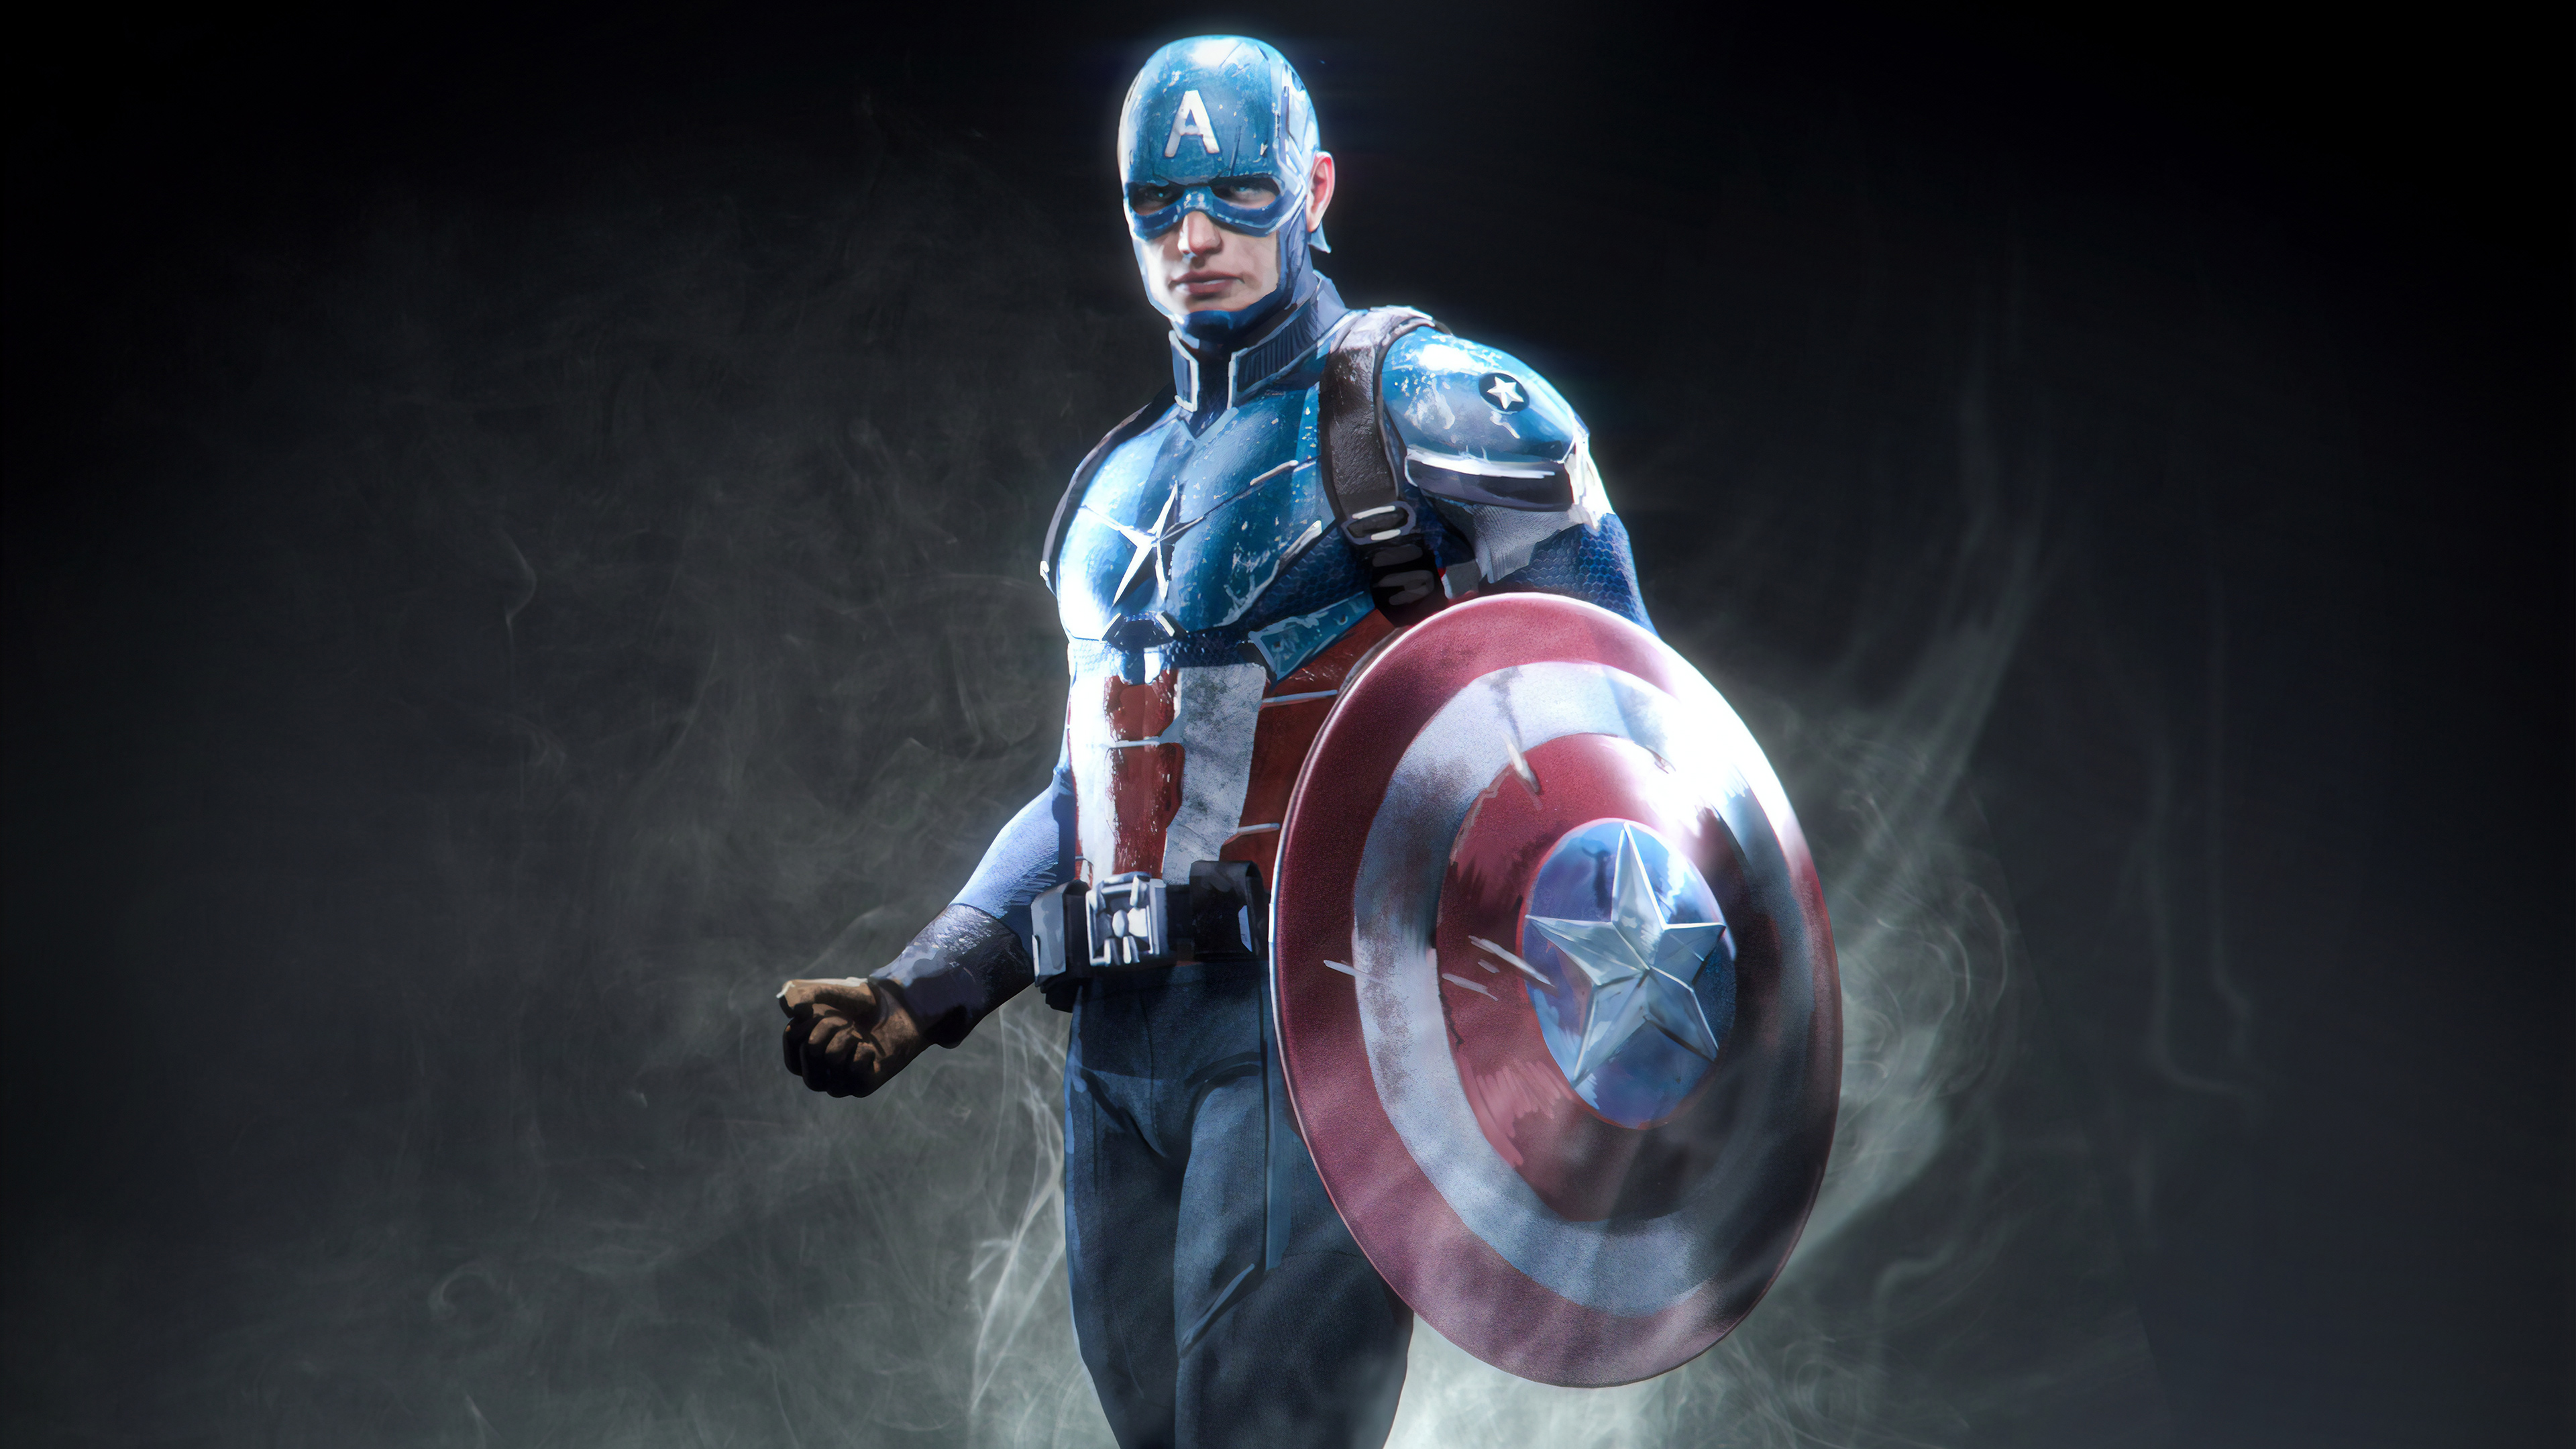 captain america marvel superhero 1565053247 - Captain America Marvel Superhero - superheroes wallpapers, marvel wallpapers, hd-wallpapers, captain america wallpapers, artstation wallpapers, 4k-wallpapers